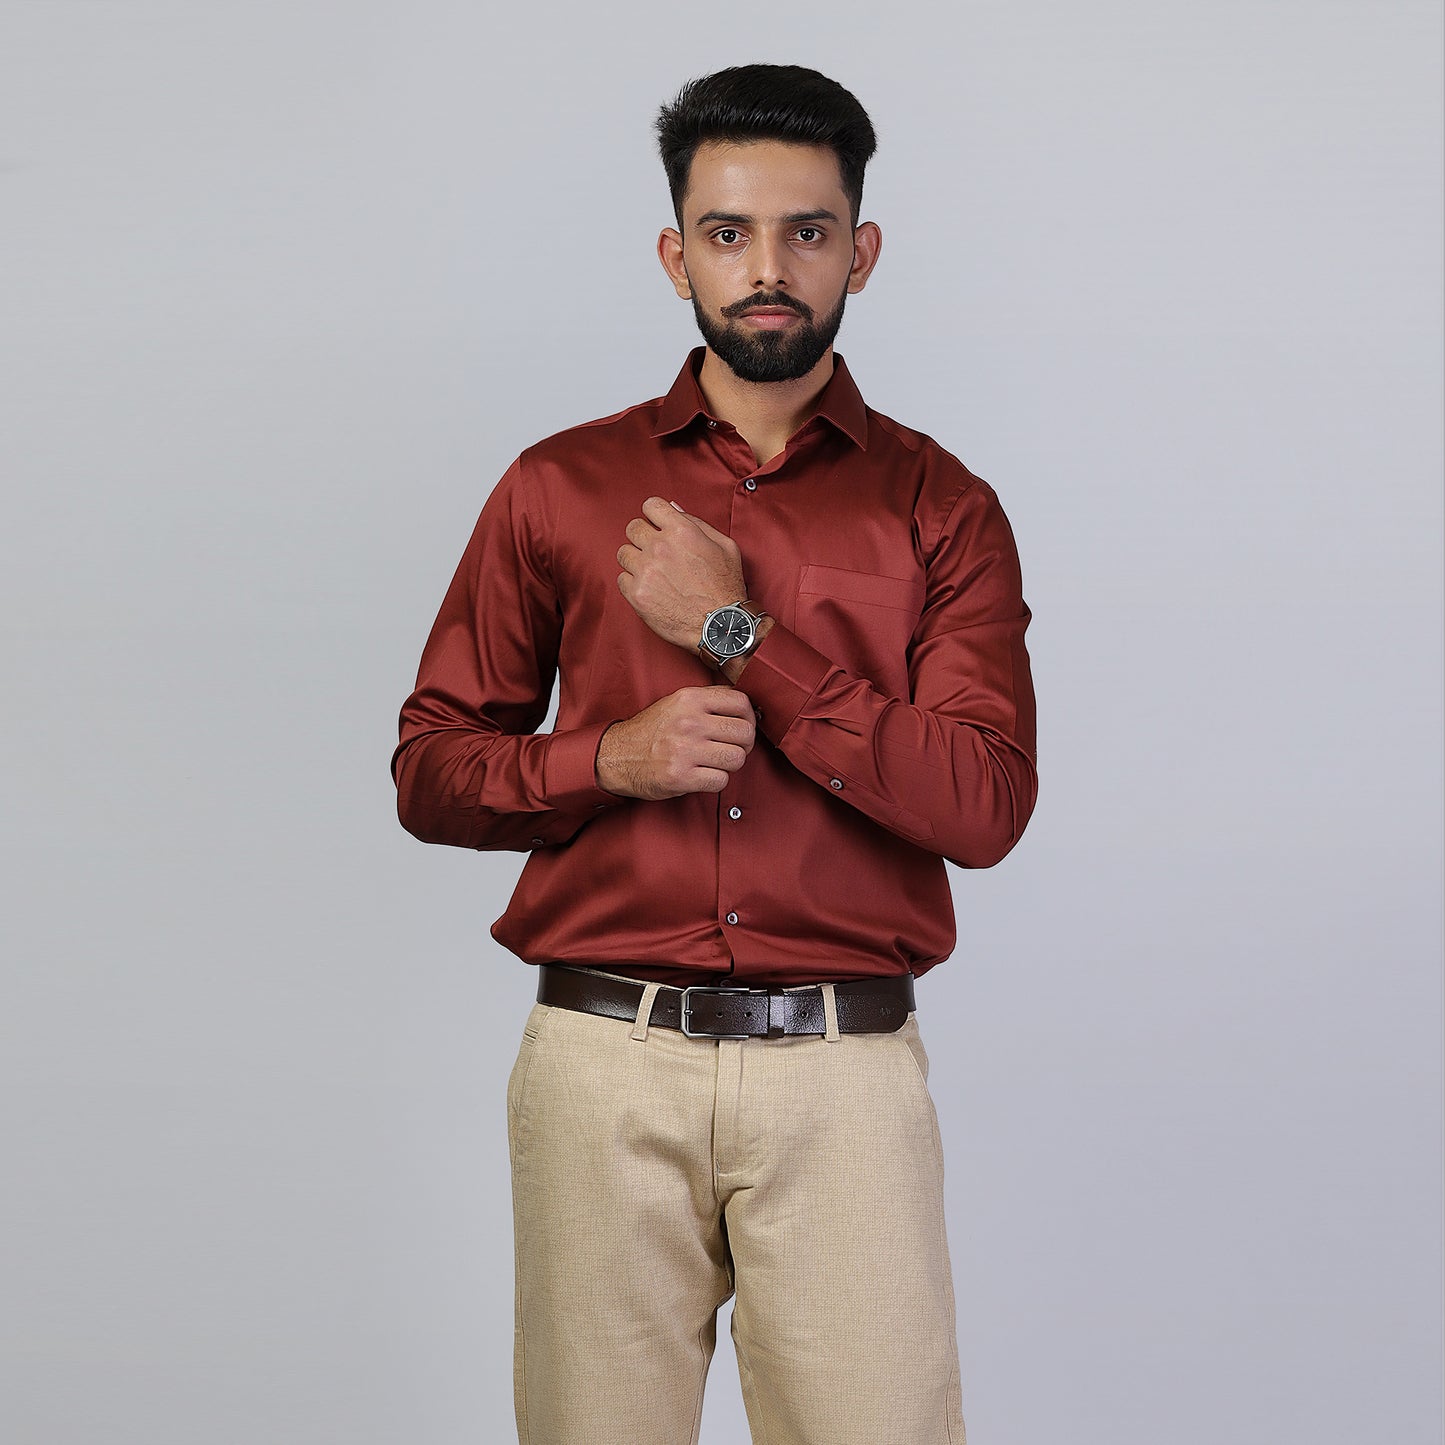 KNS 209 - Brown Formal Shirt